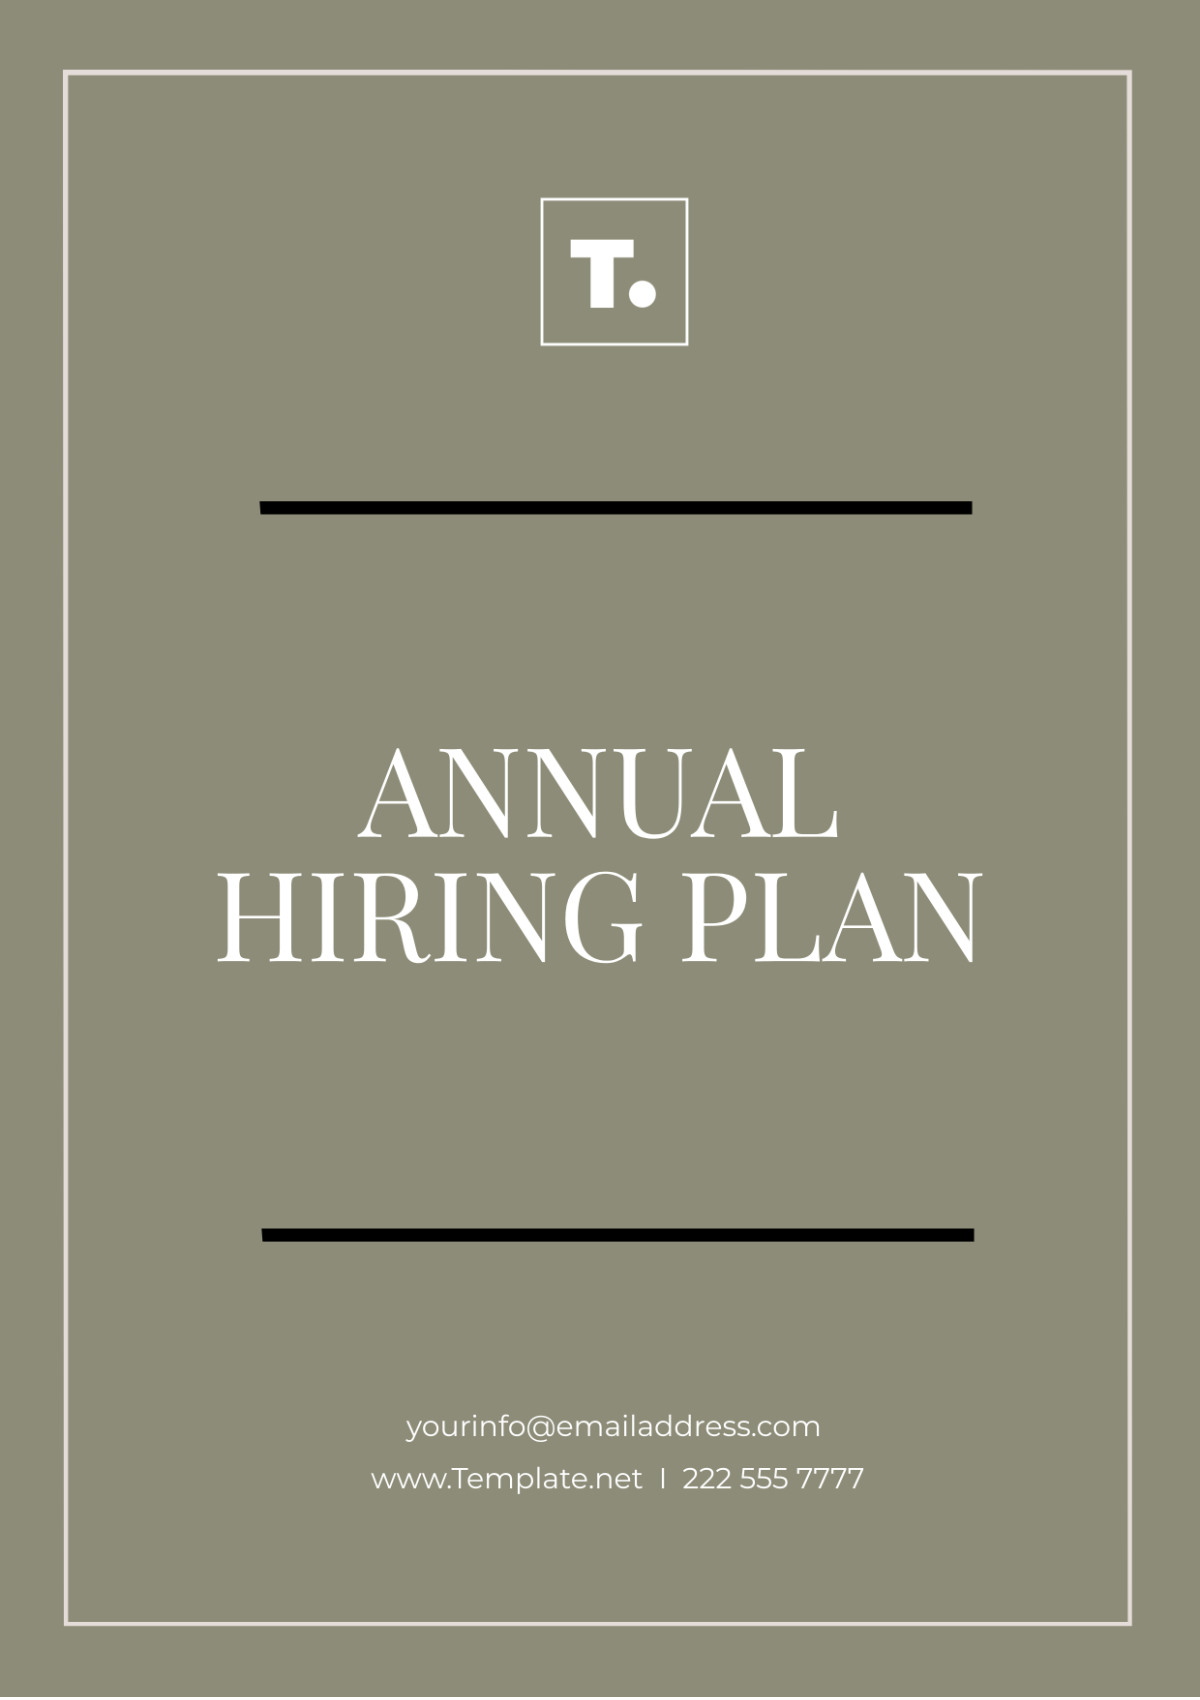 Free Annual Hiring Plan Template